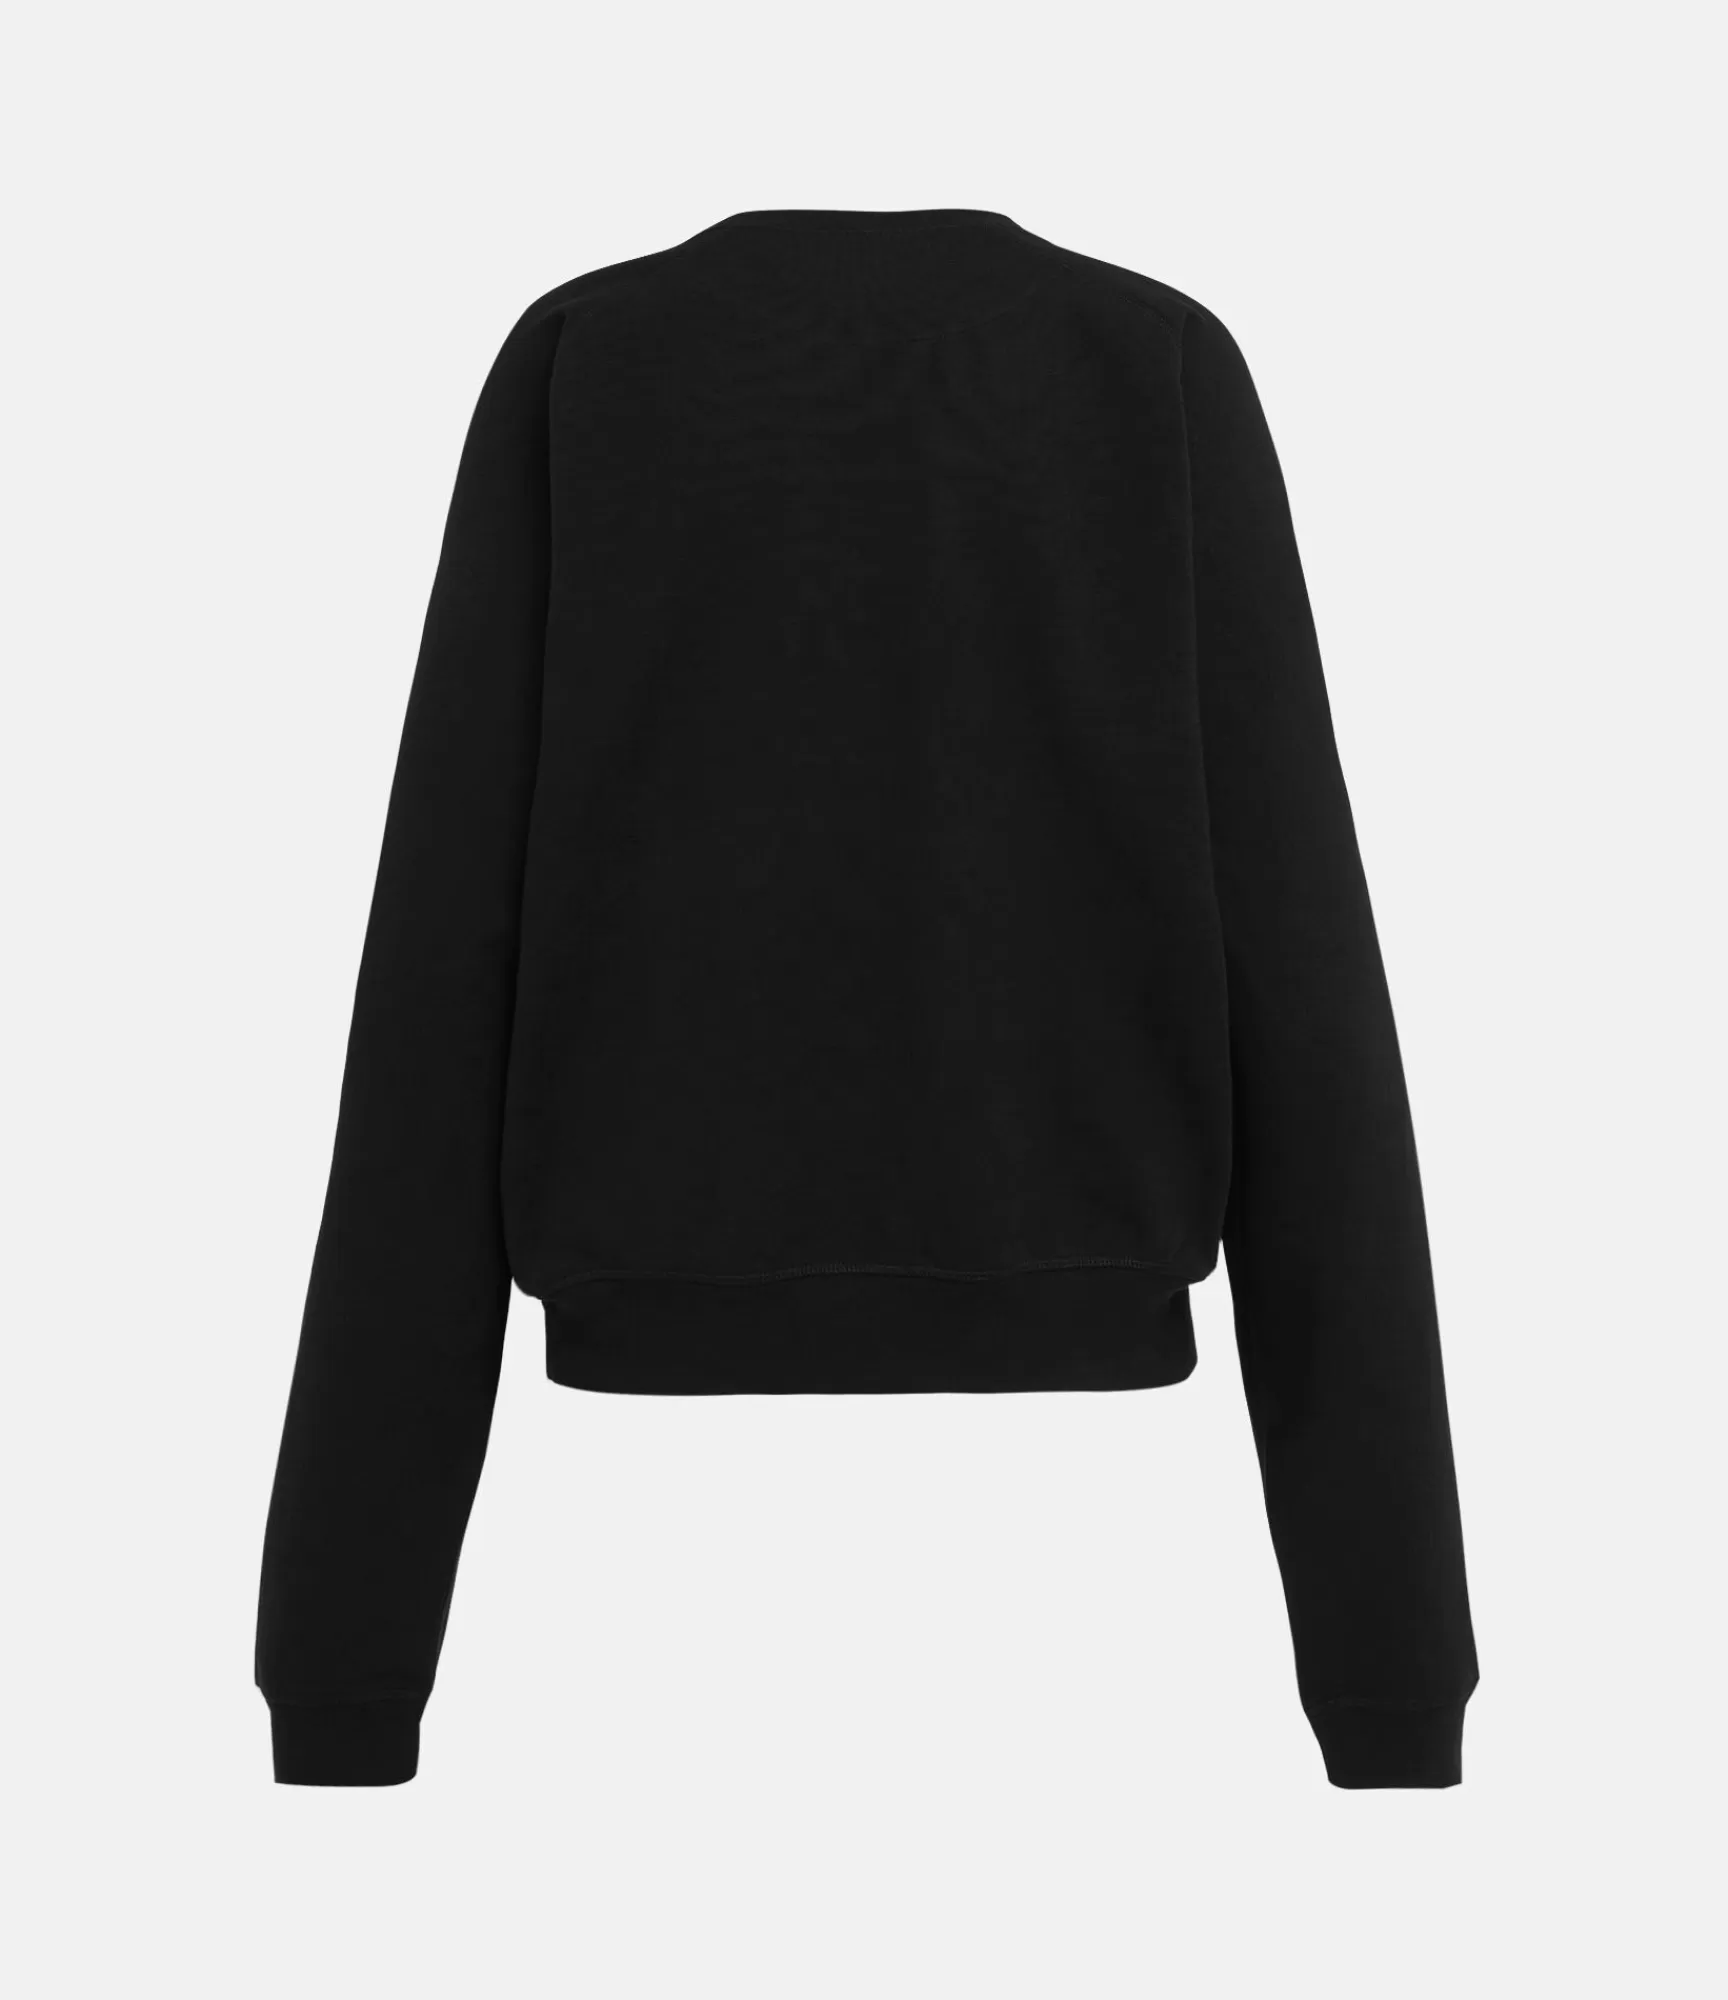 Vivienne Westwood Sweatshirts and T-Shirts*Time machine raglan sweatshirt Black